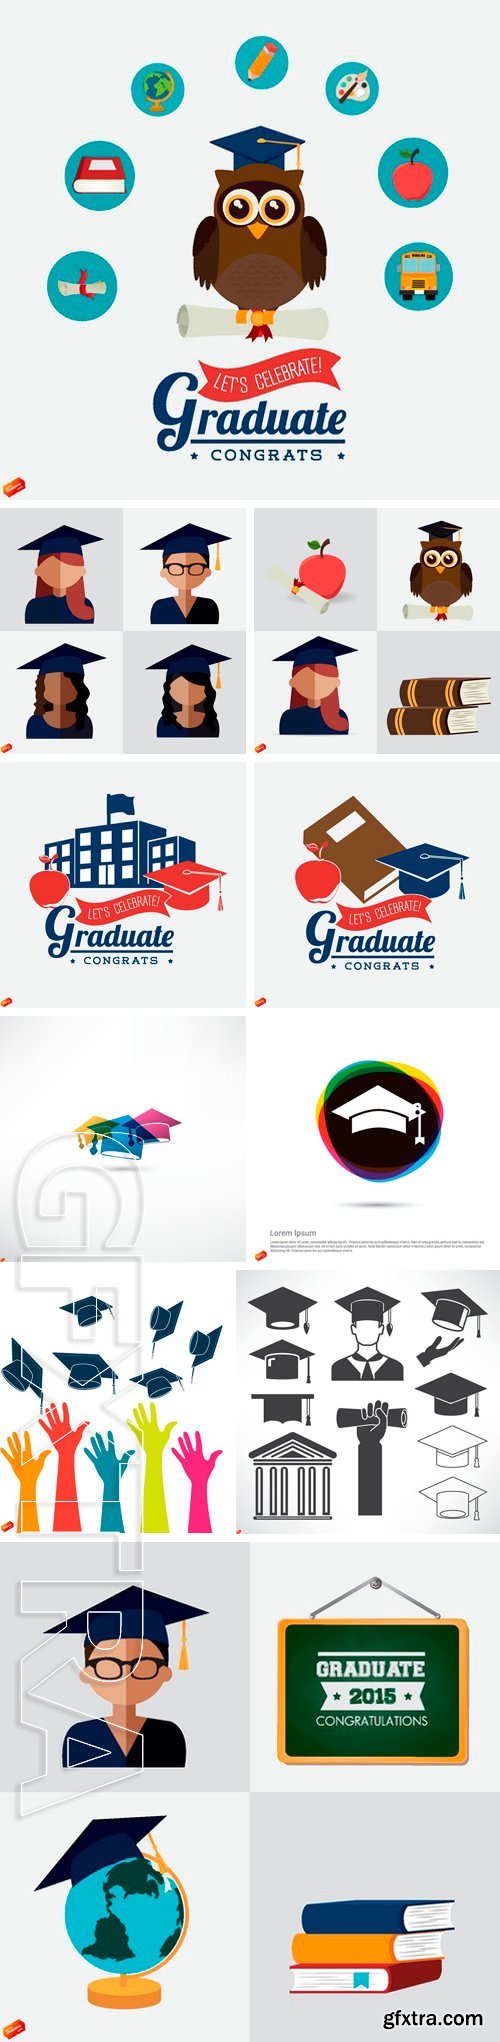 Stock Vectors - Graduation design over white background, vector illustration